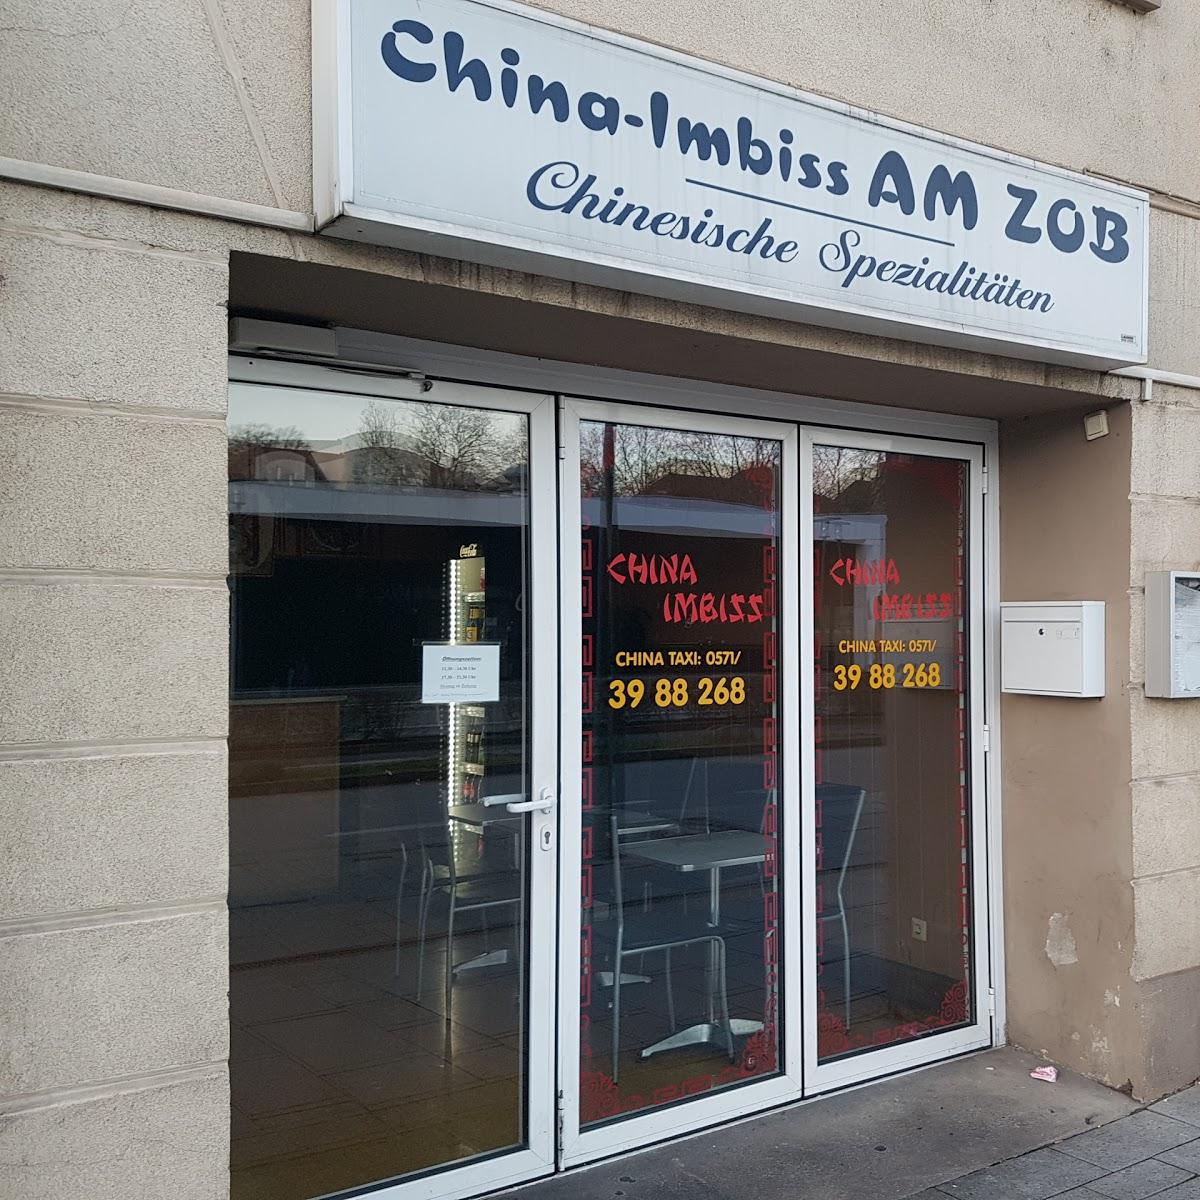 Restaurant "China Imbiss am ZOB" in Minden